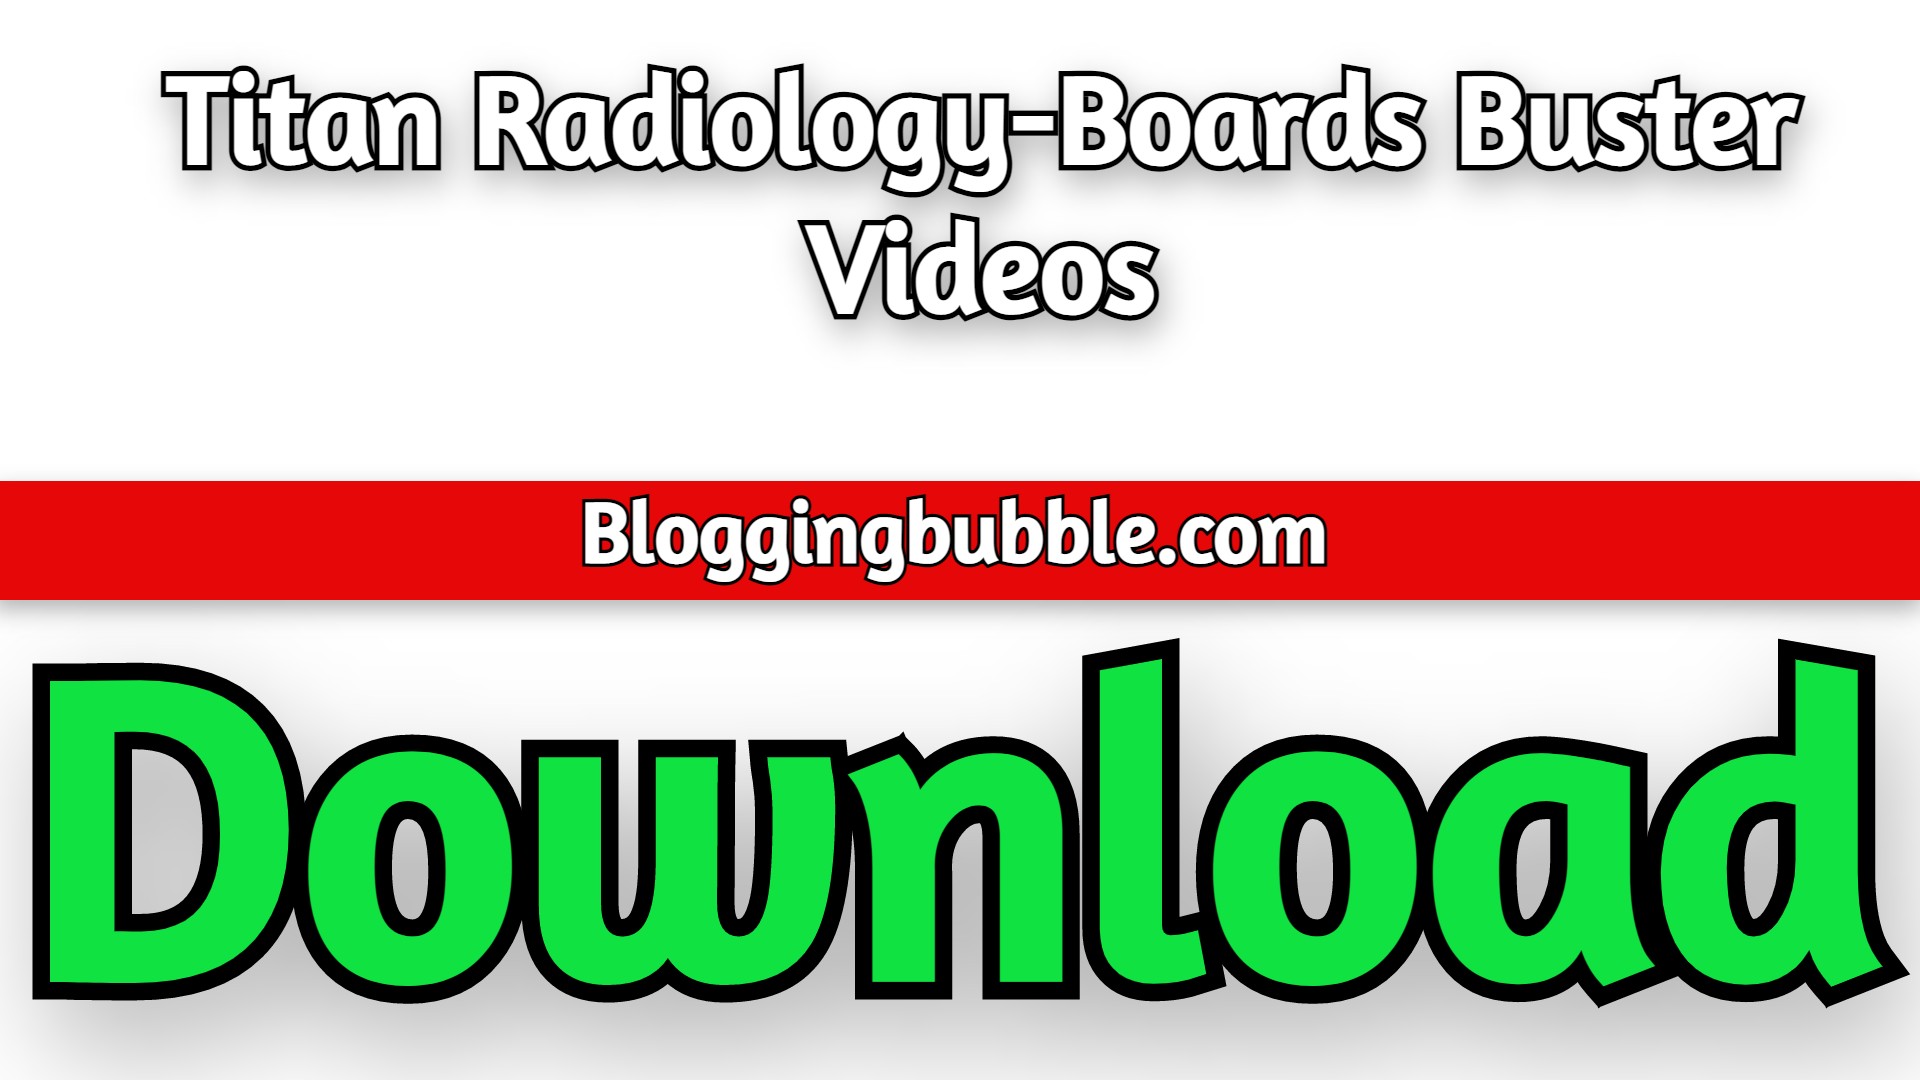 Titan Radiology-Boards Buster 2022 Videos